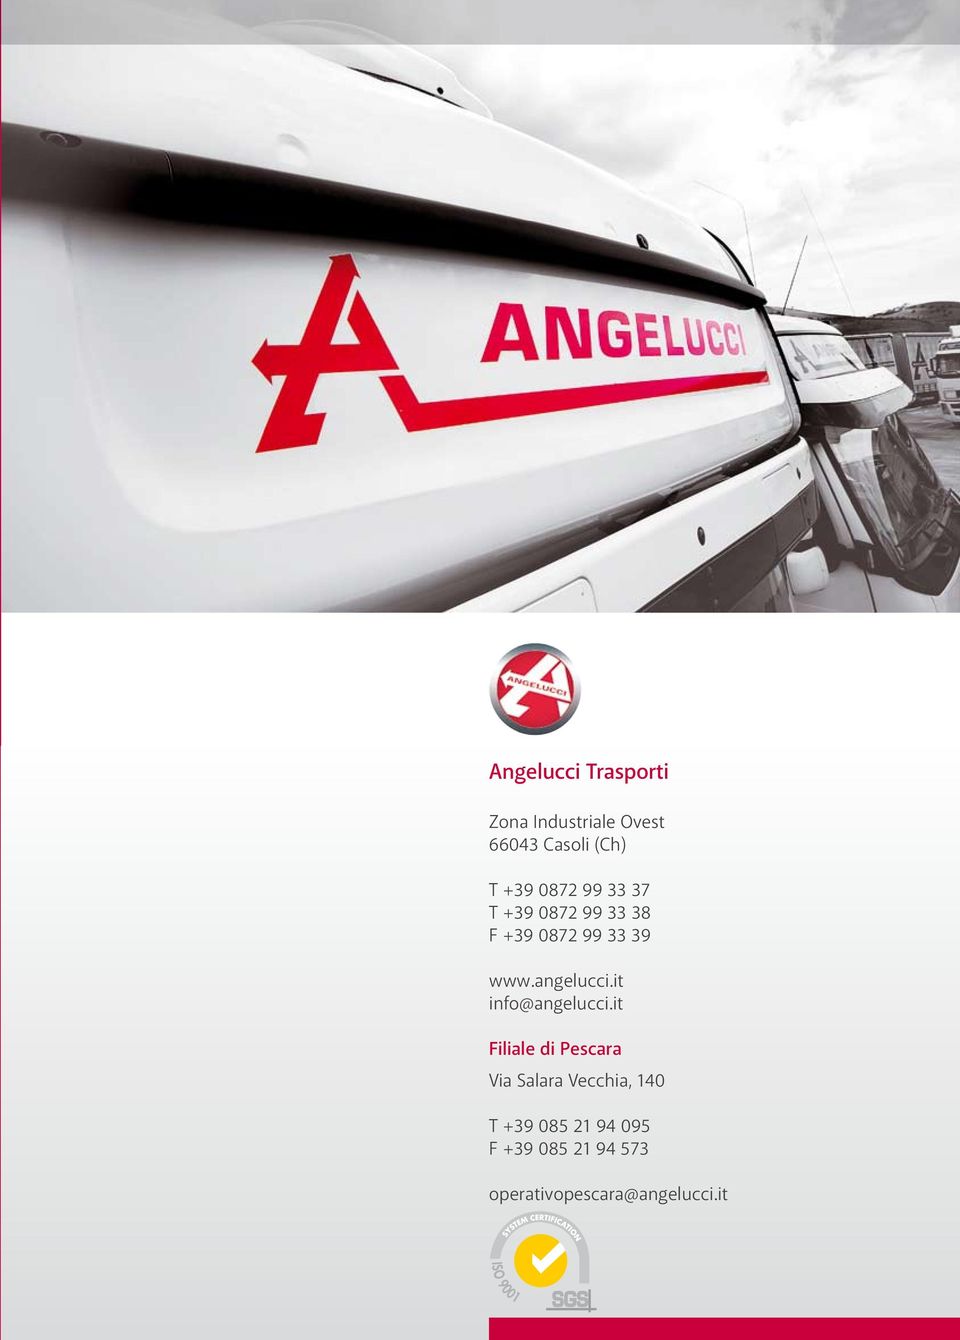 angelucci.it info@angelucci.